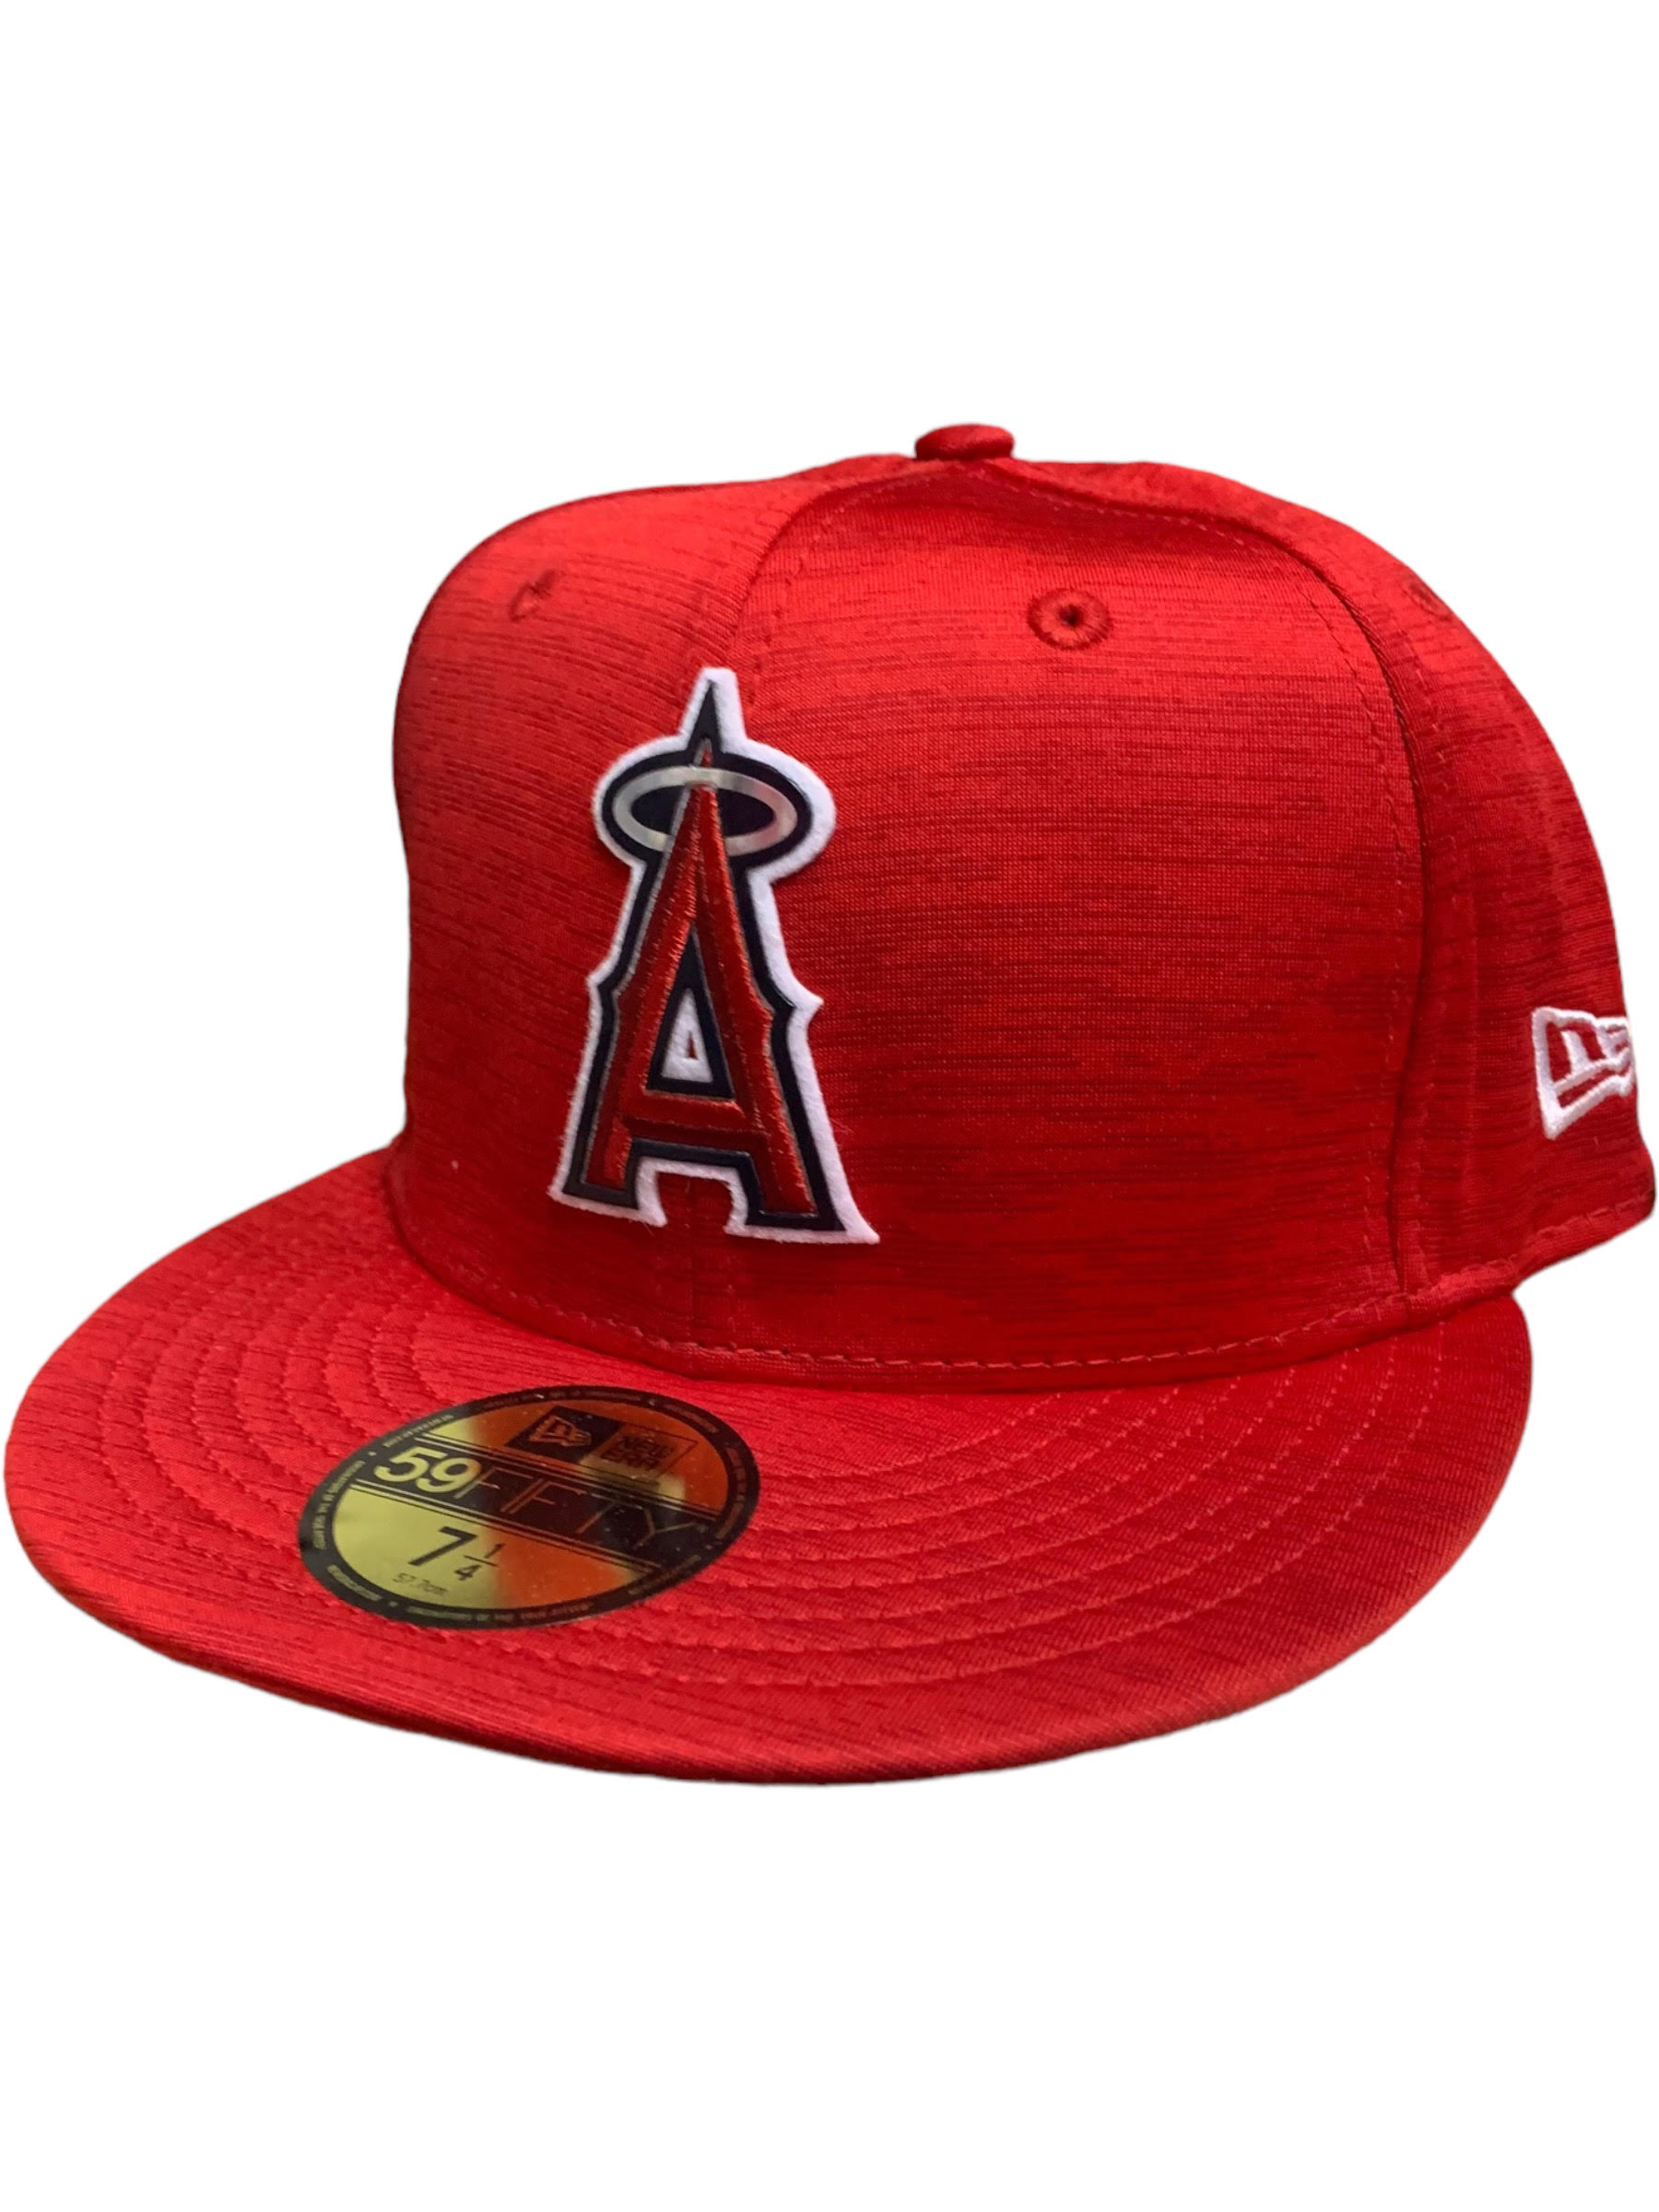 New Era 59Fifty Philadelphia Phillies ALT 2 Fitted Hat (Cardinal) Men's MLB  Cap